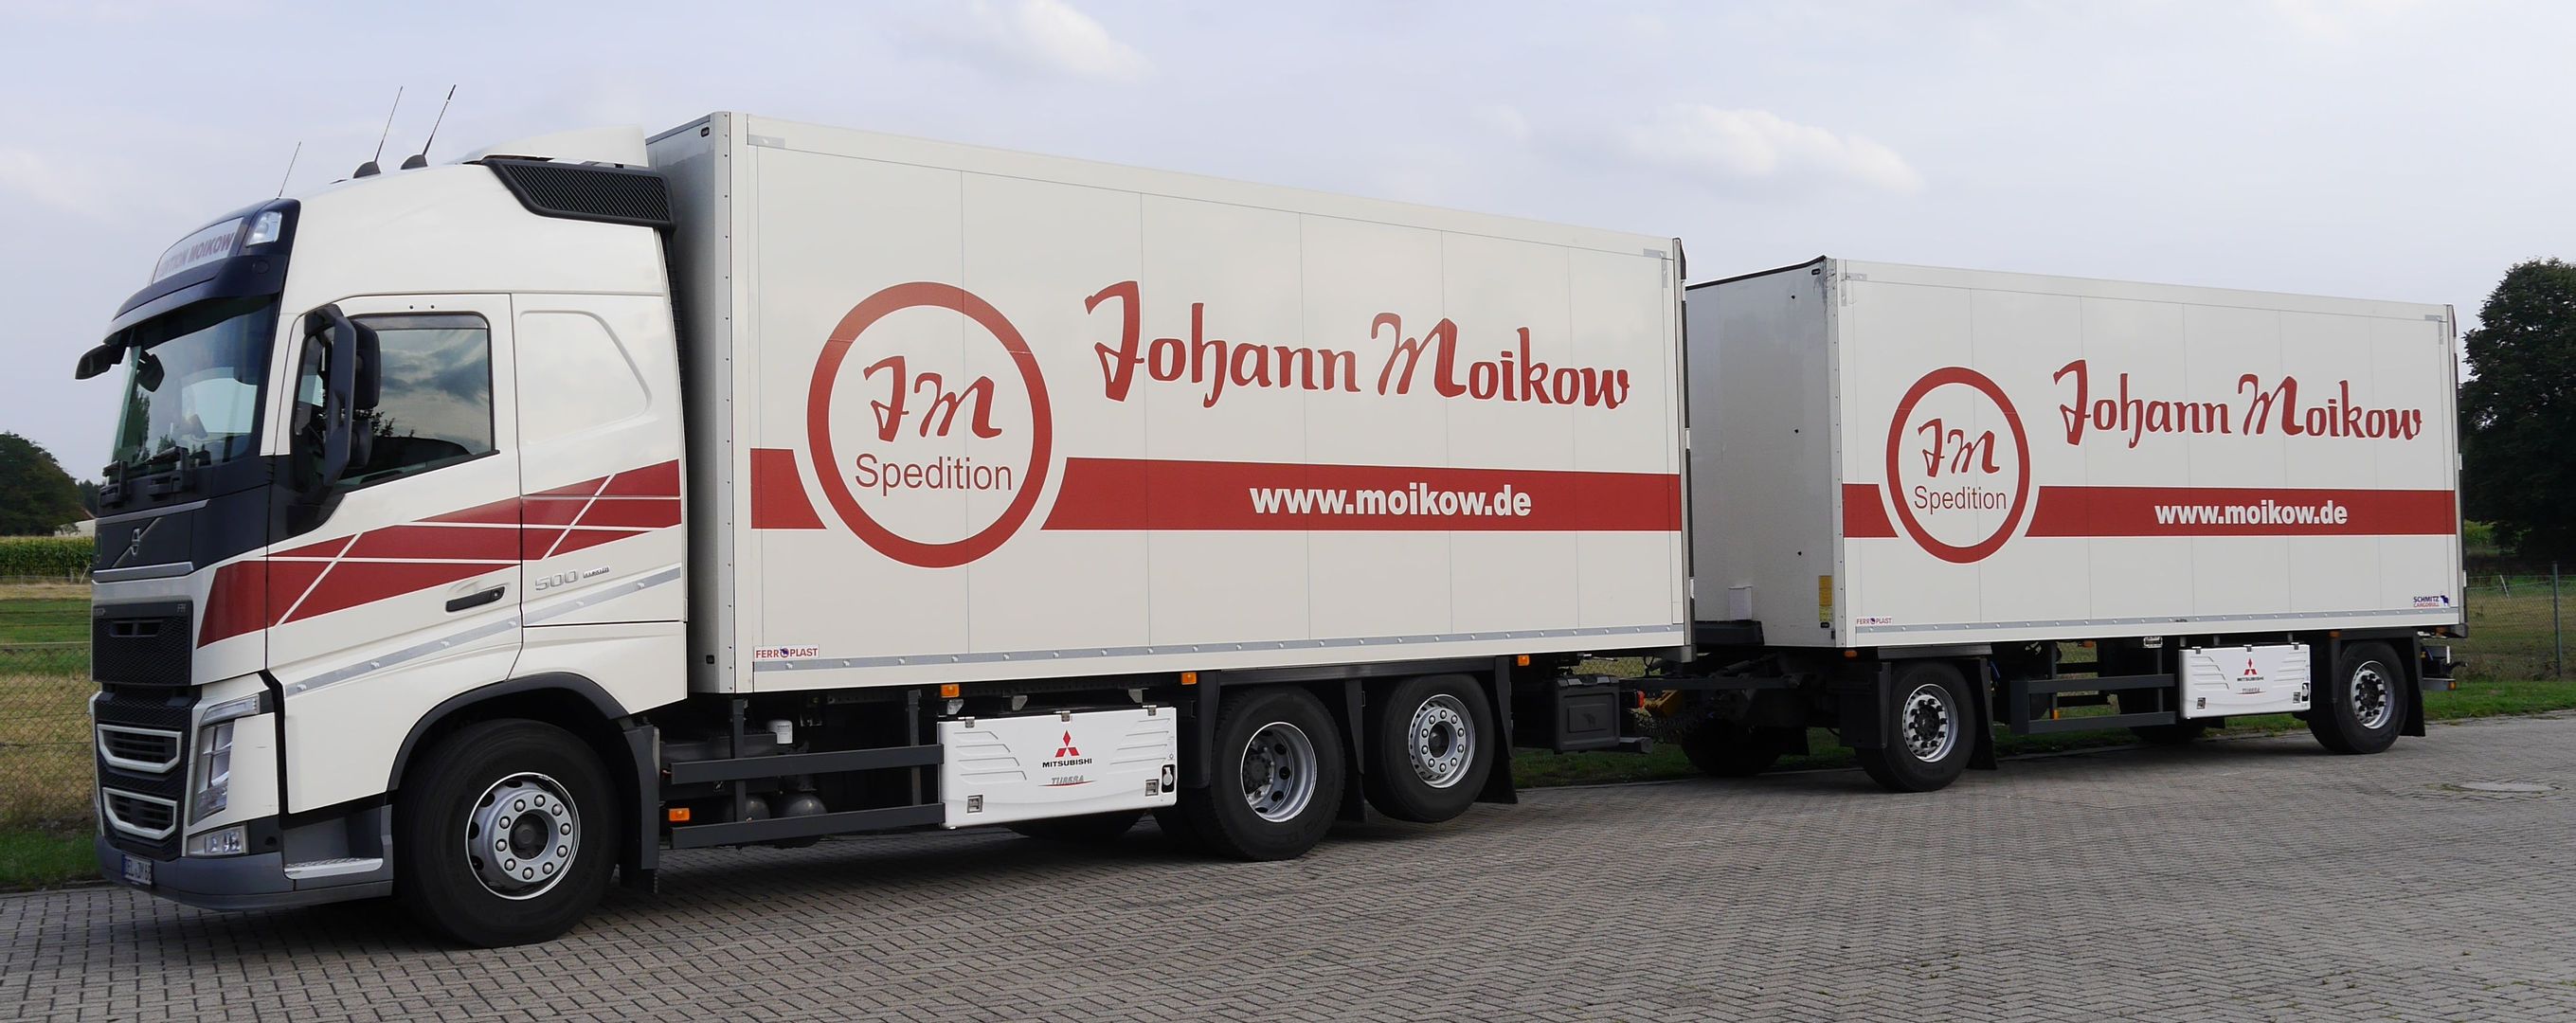 Wir über uns | Johann Moikow GmbH & Co. - Spedition